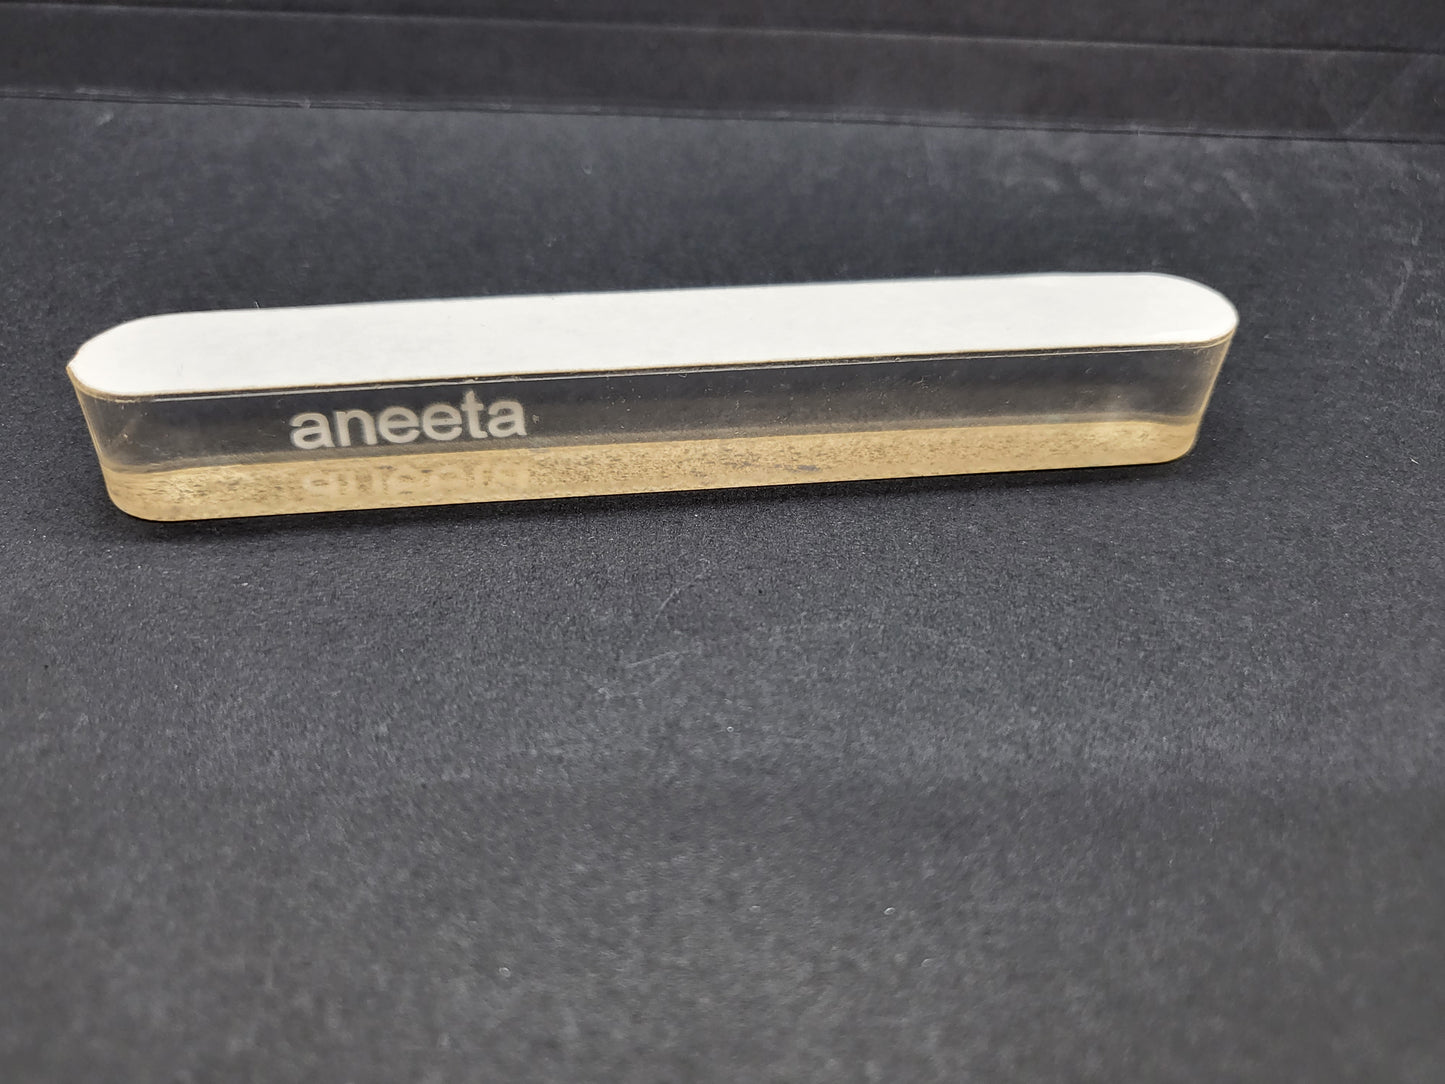 Sashless window handles - clear acrylic - suits Aneeta, Shugg  - Sold singularly